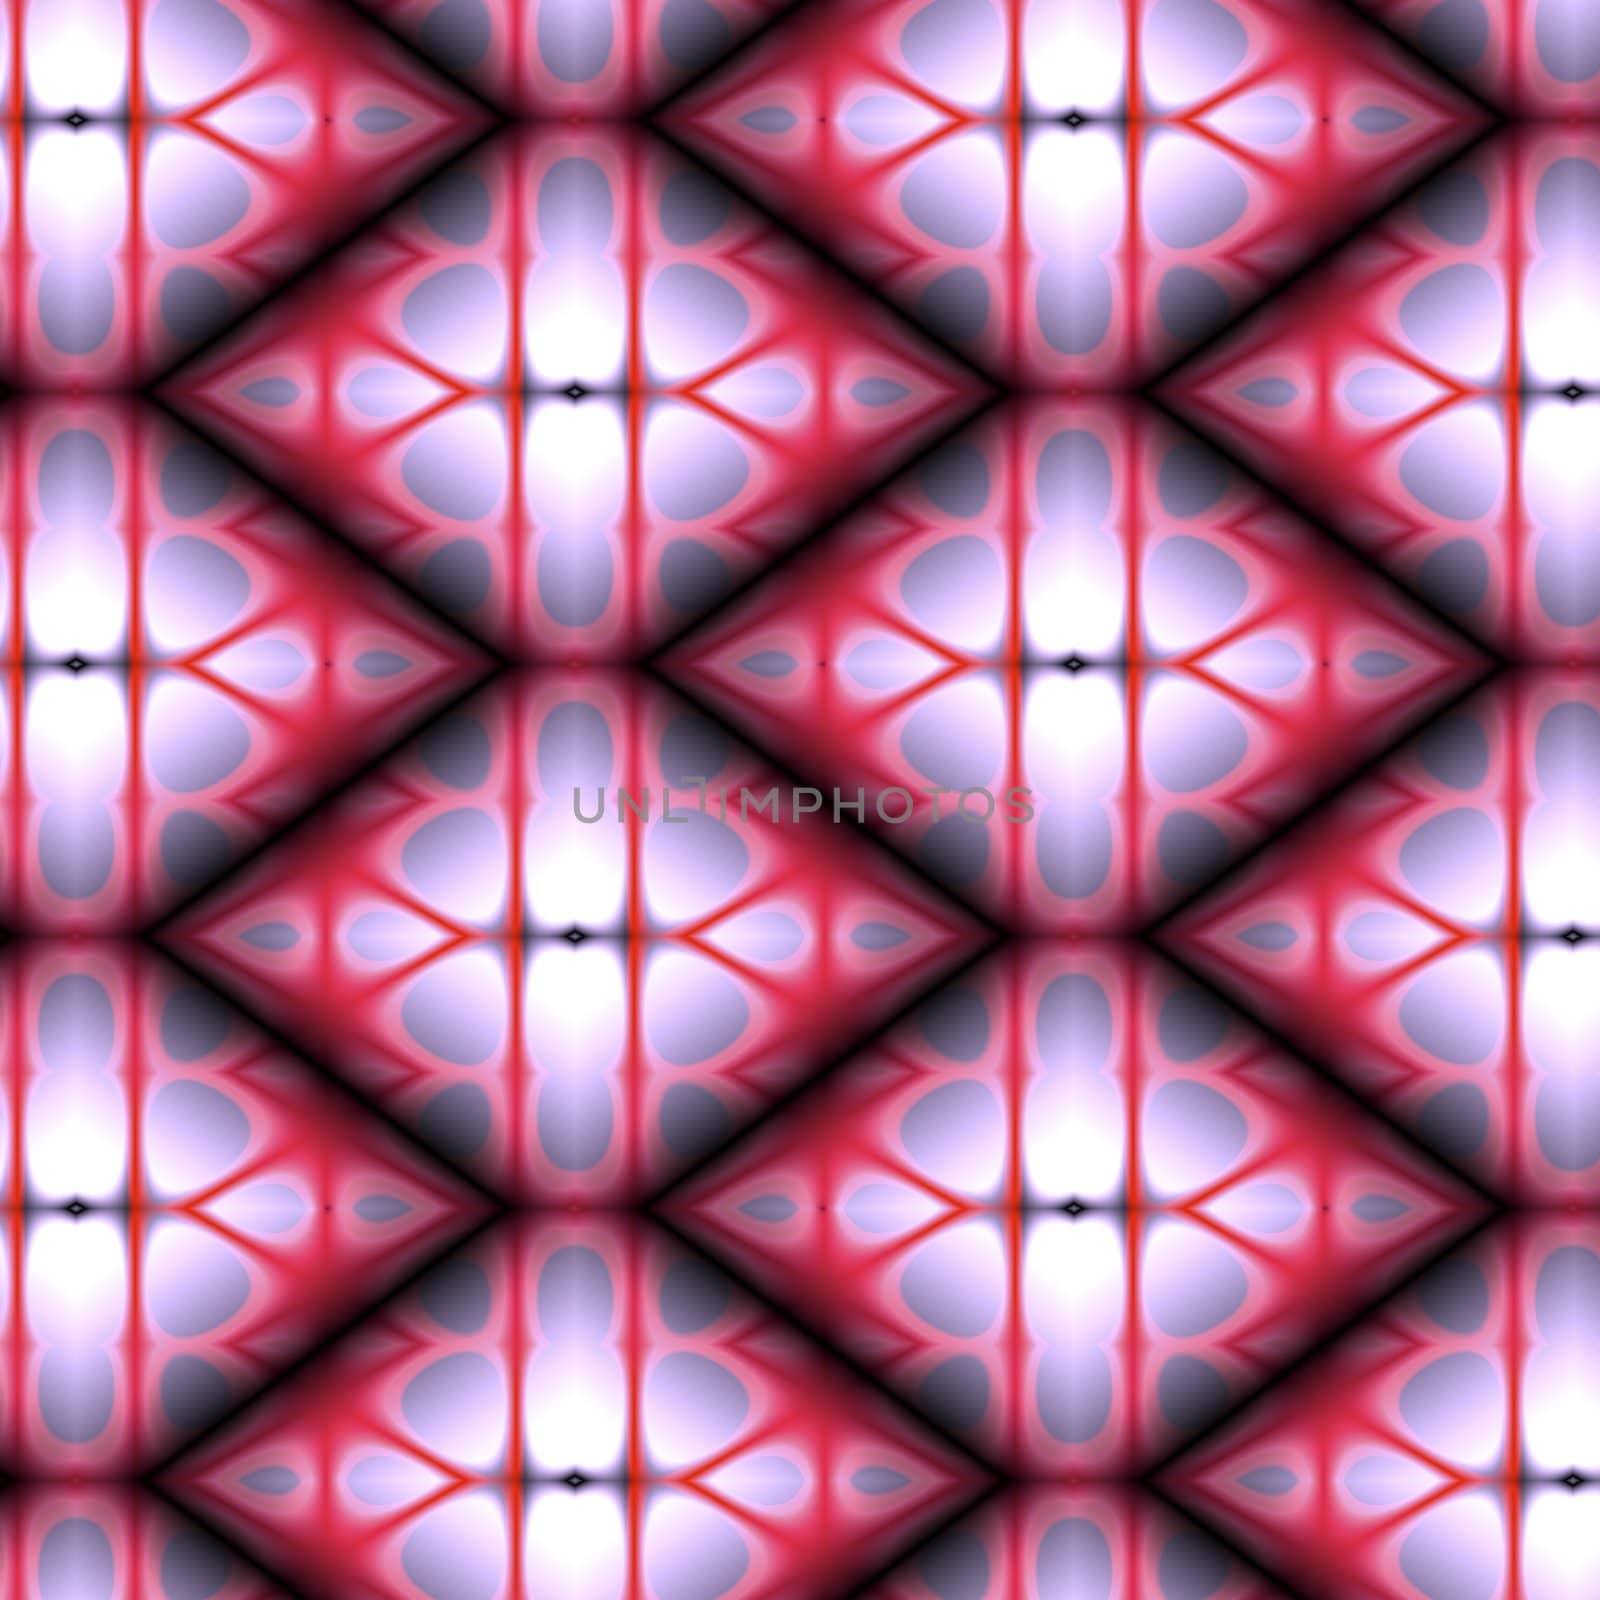 Red and Purple Diamond Shaped Tile Background by patballard